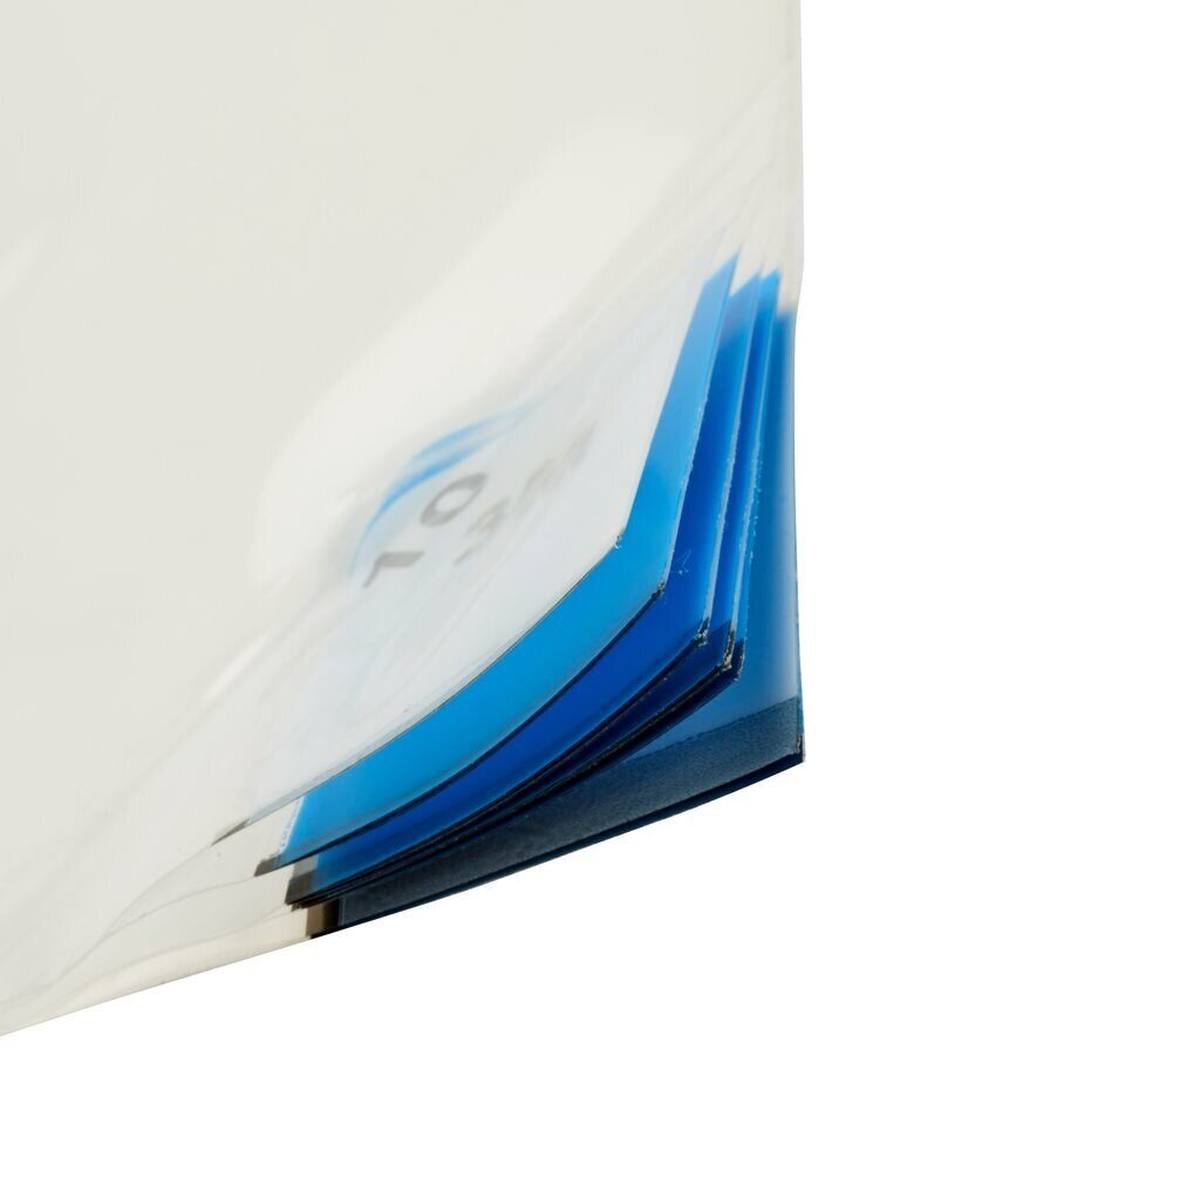 3M 4300 Nomad Tappetino adesivo per polveri sottili, bianco, 0,9m x 0,45m, 40pz strati di polietilene trasparente